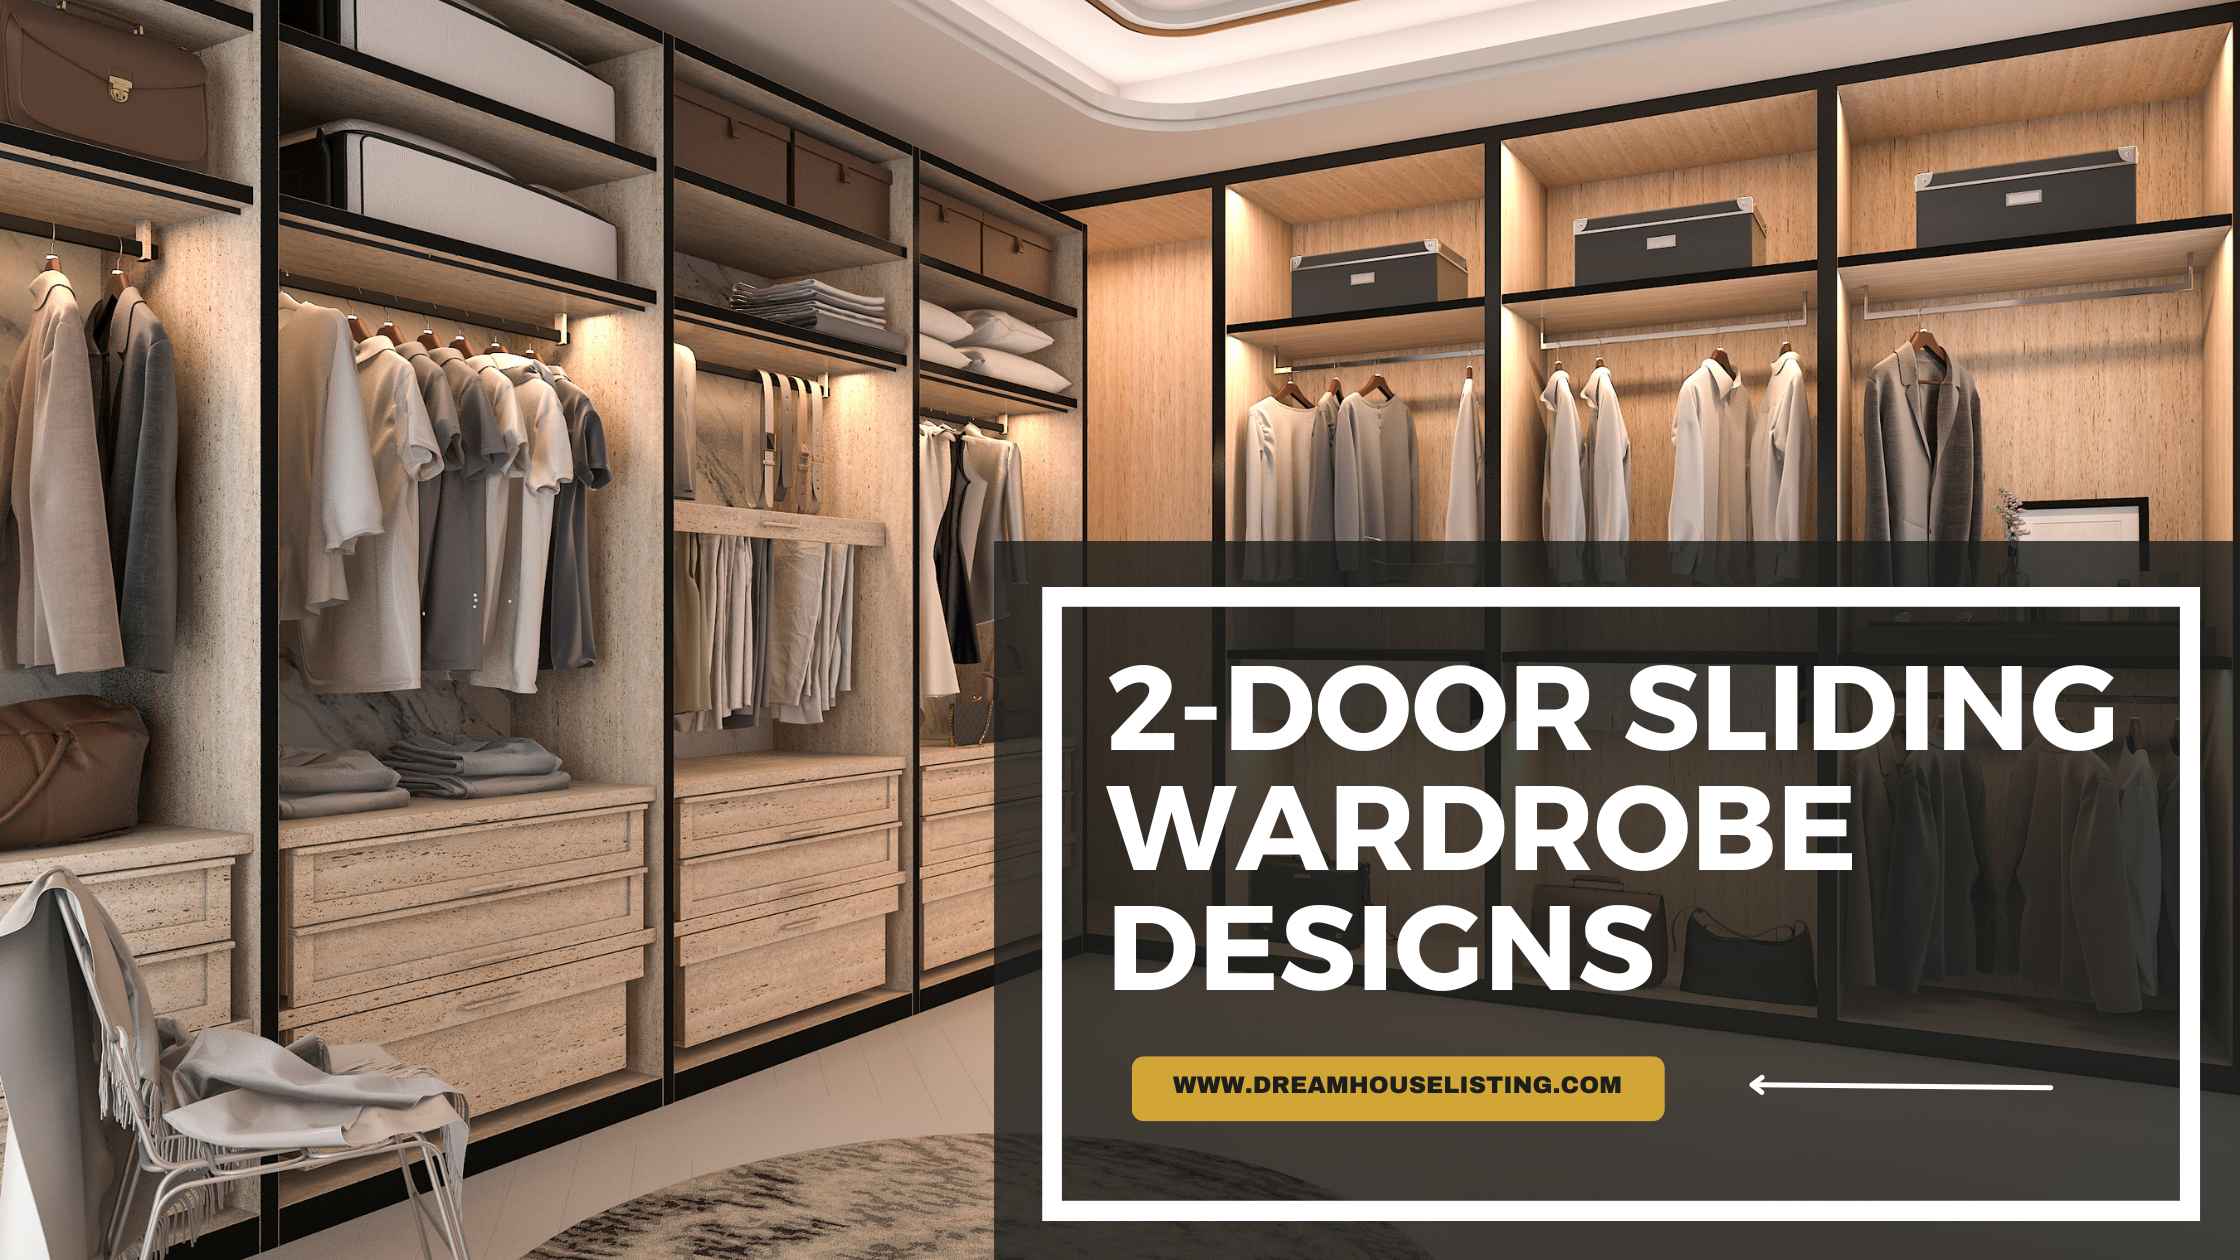 2-Door Sliding Wardrobe Designs